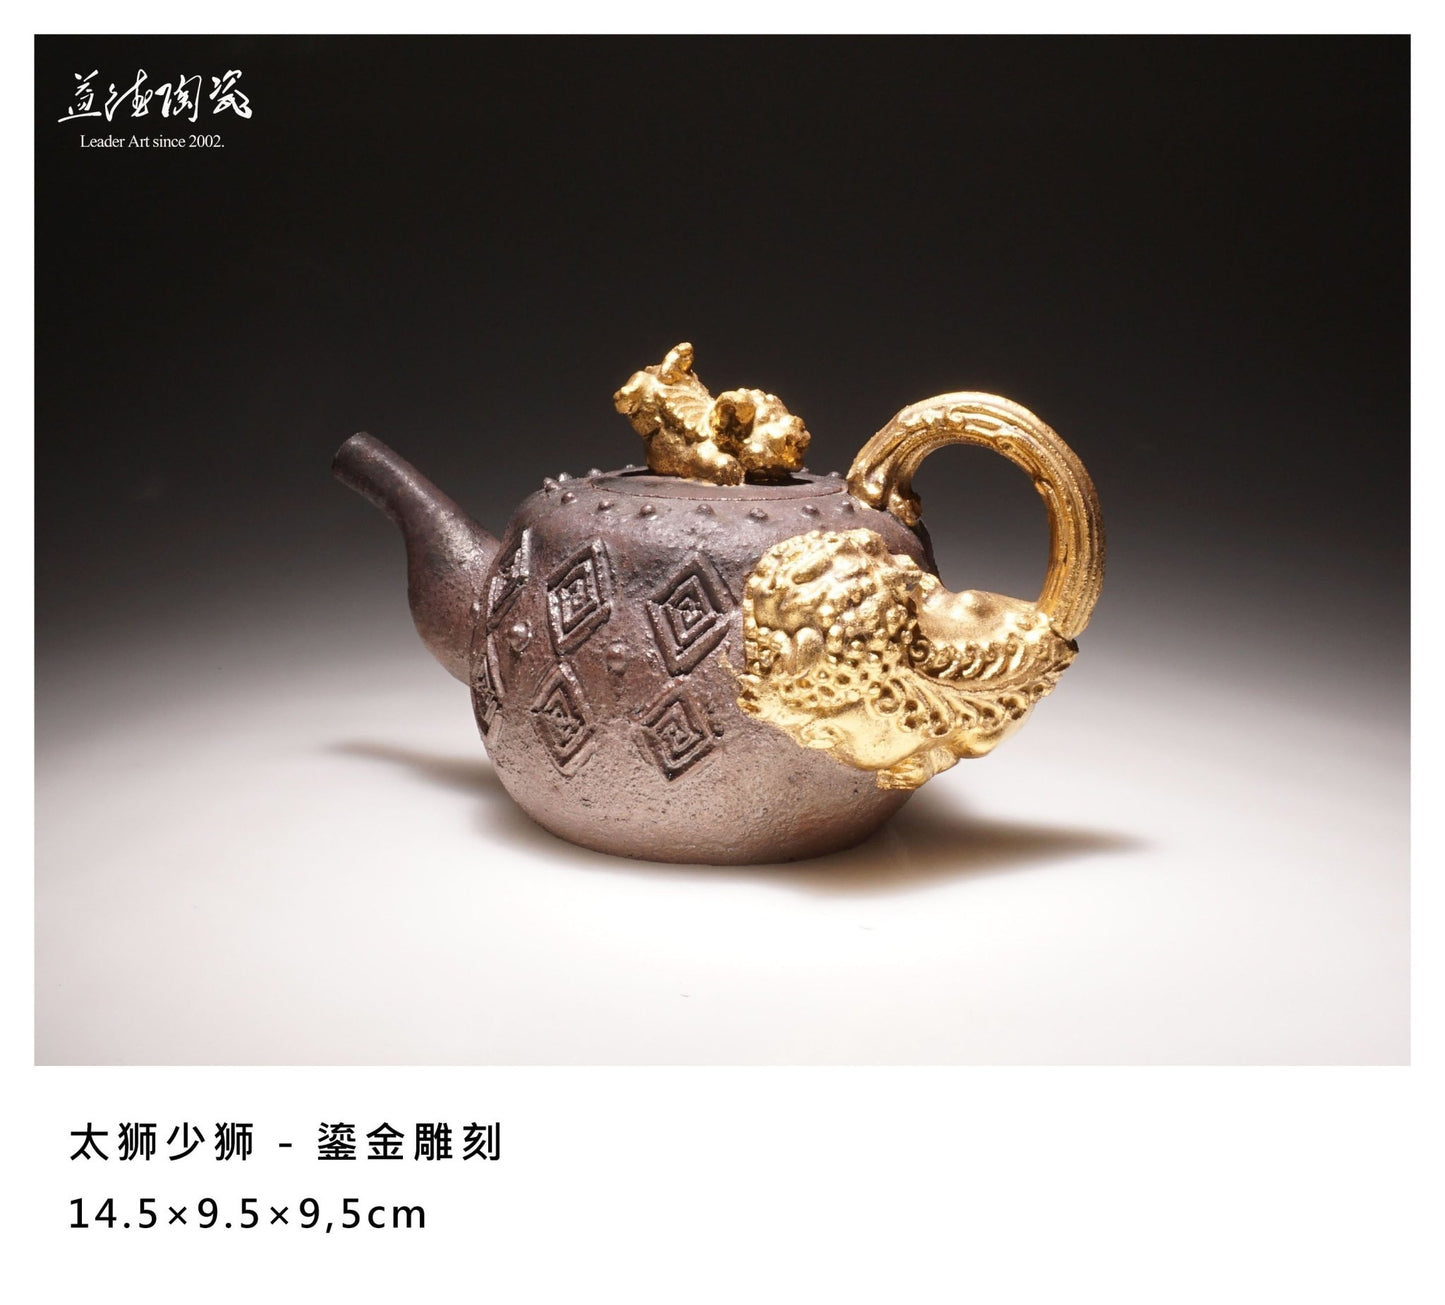 Taishi less division - pottery gilding - LEADER 益德 | 居家設計藝品・人文茶器・空間美學作品